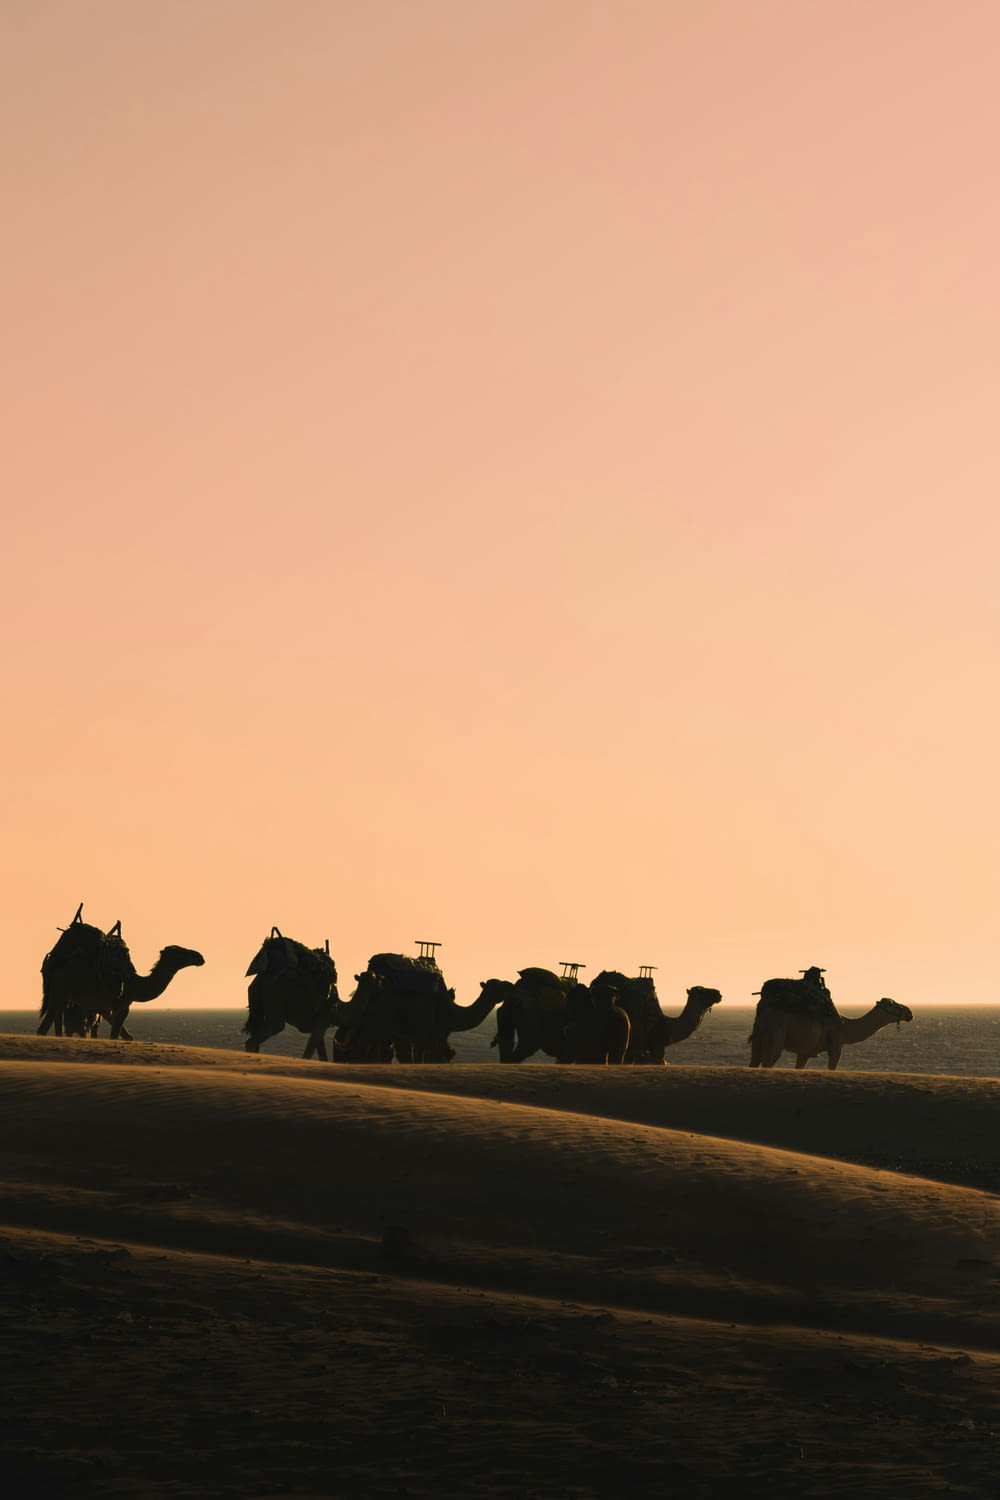 a group of camels walking across a desert